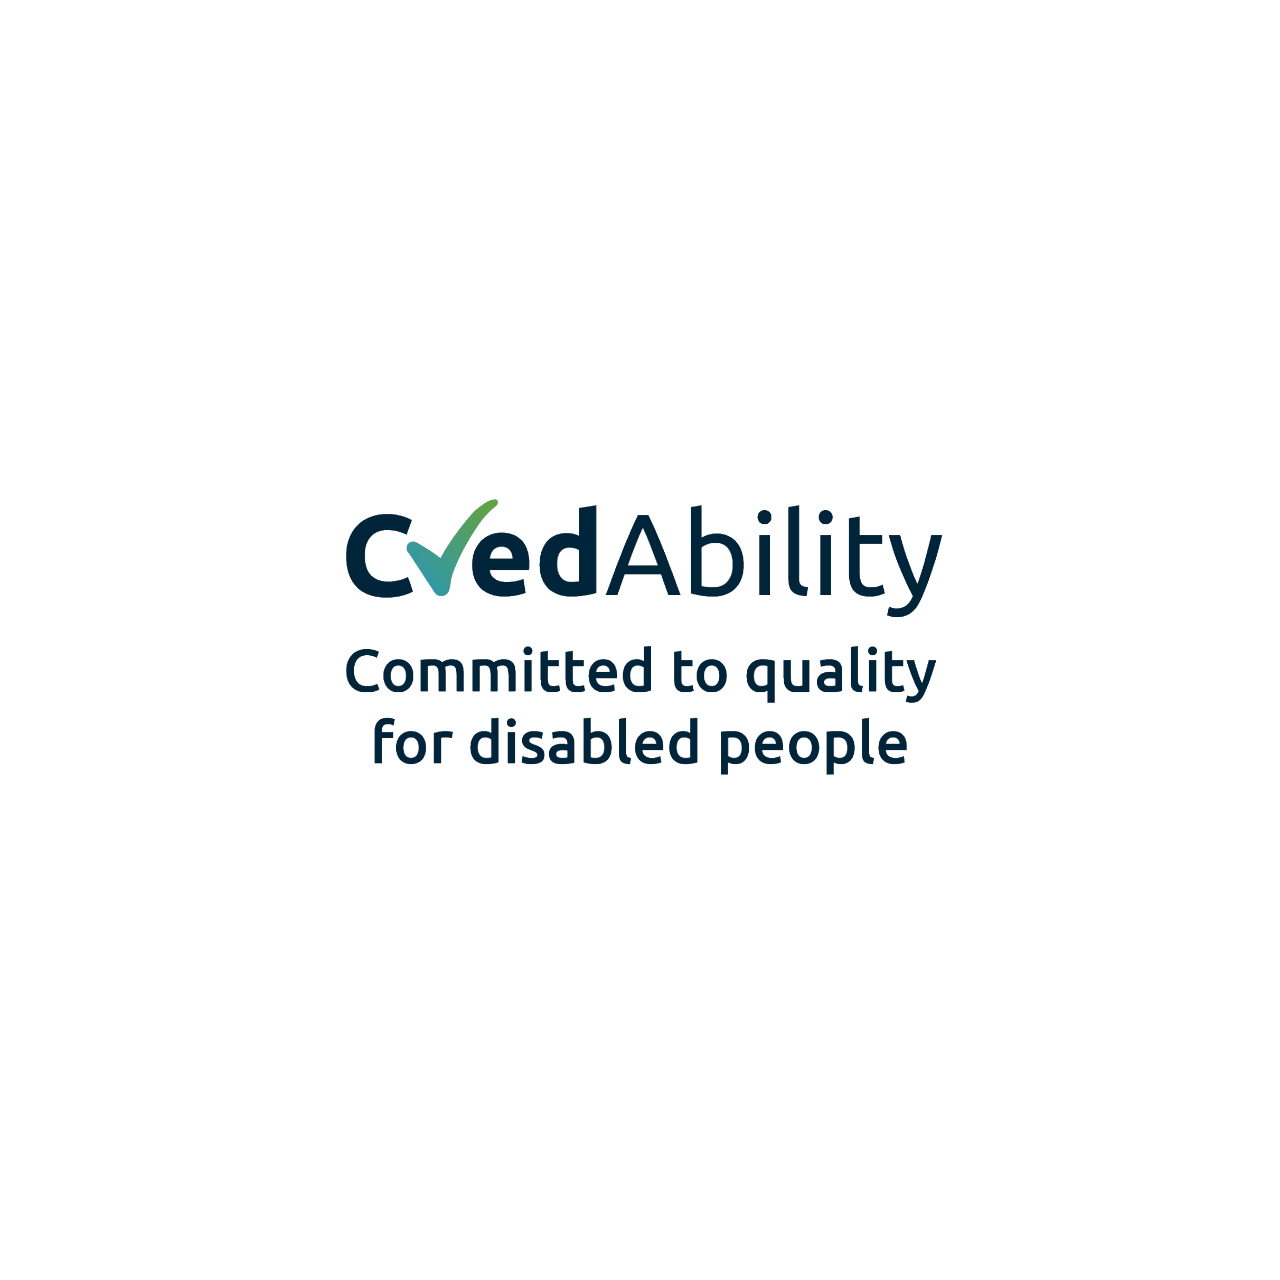 Nimbus Disability - CredAbility